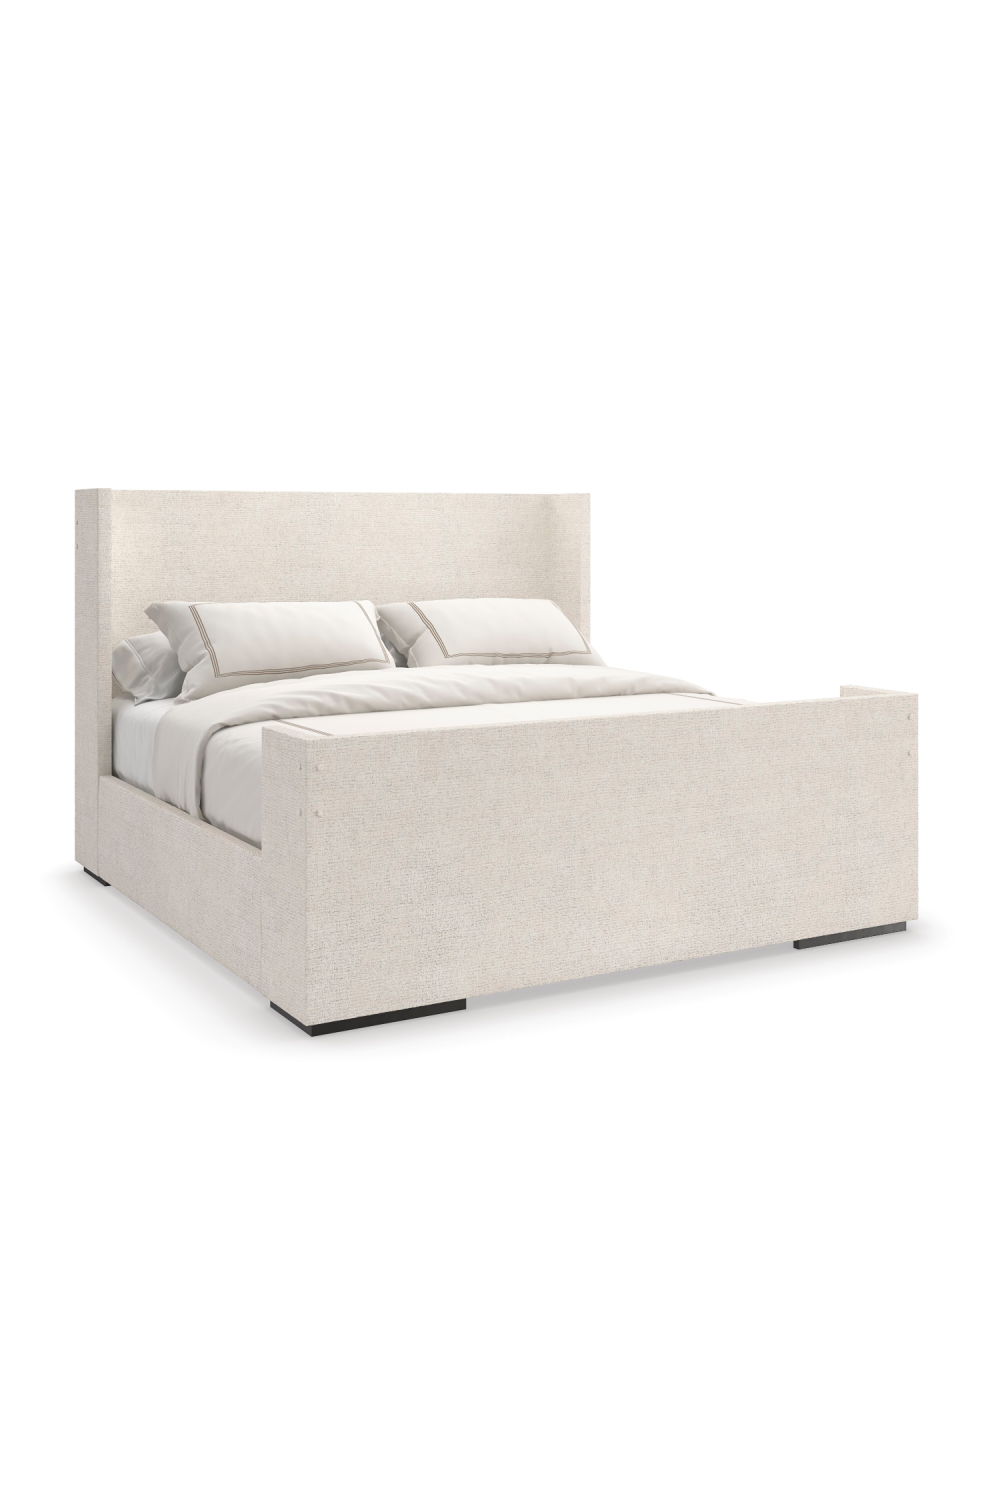 Modern White Bed | Caracole Shelter Me | Oroa.com